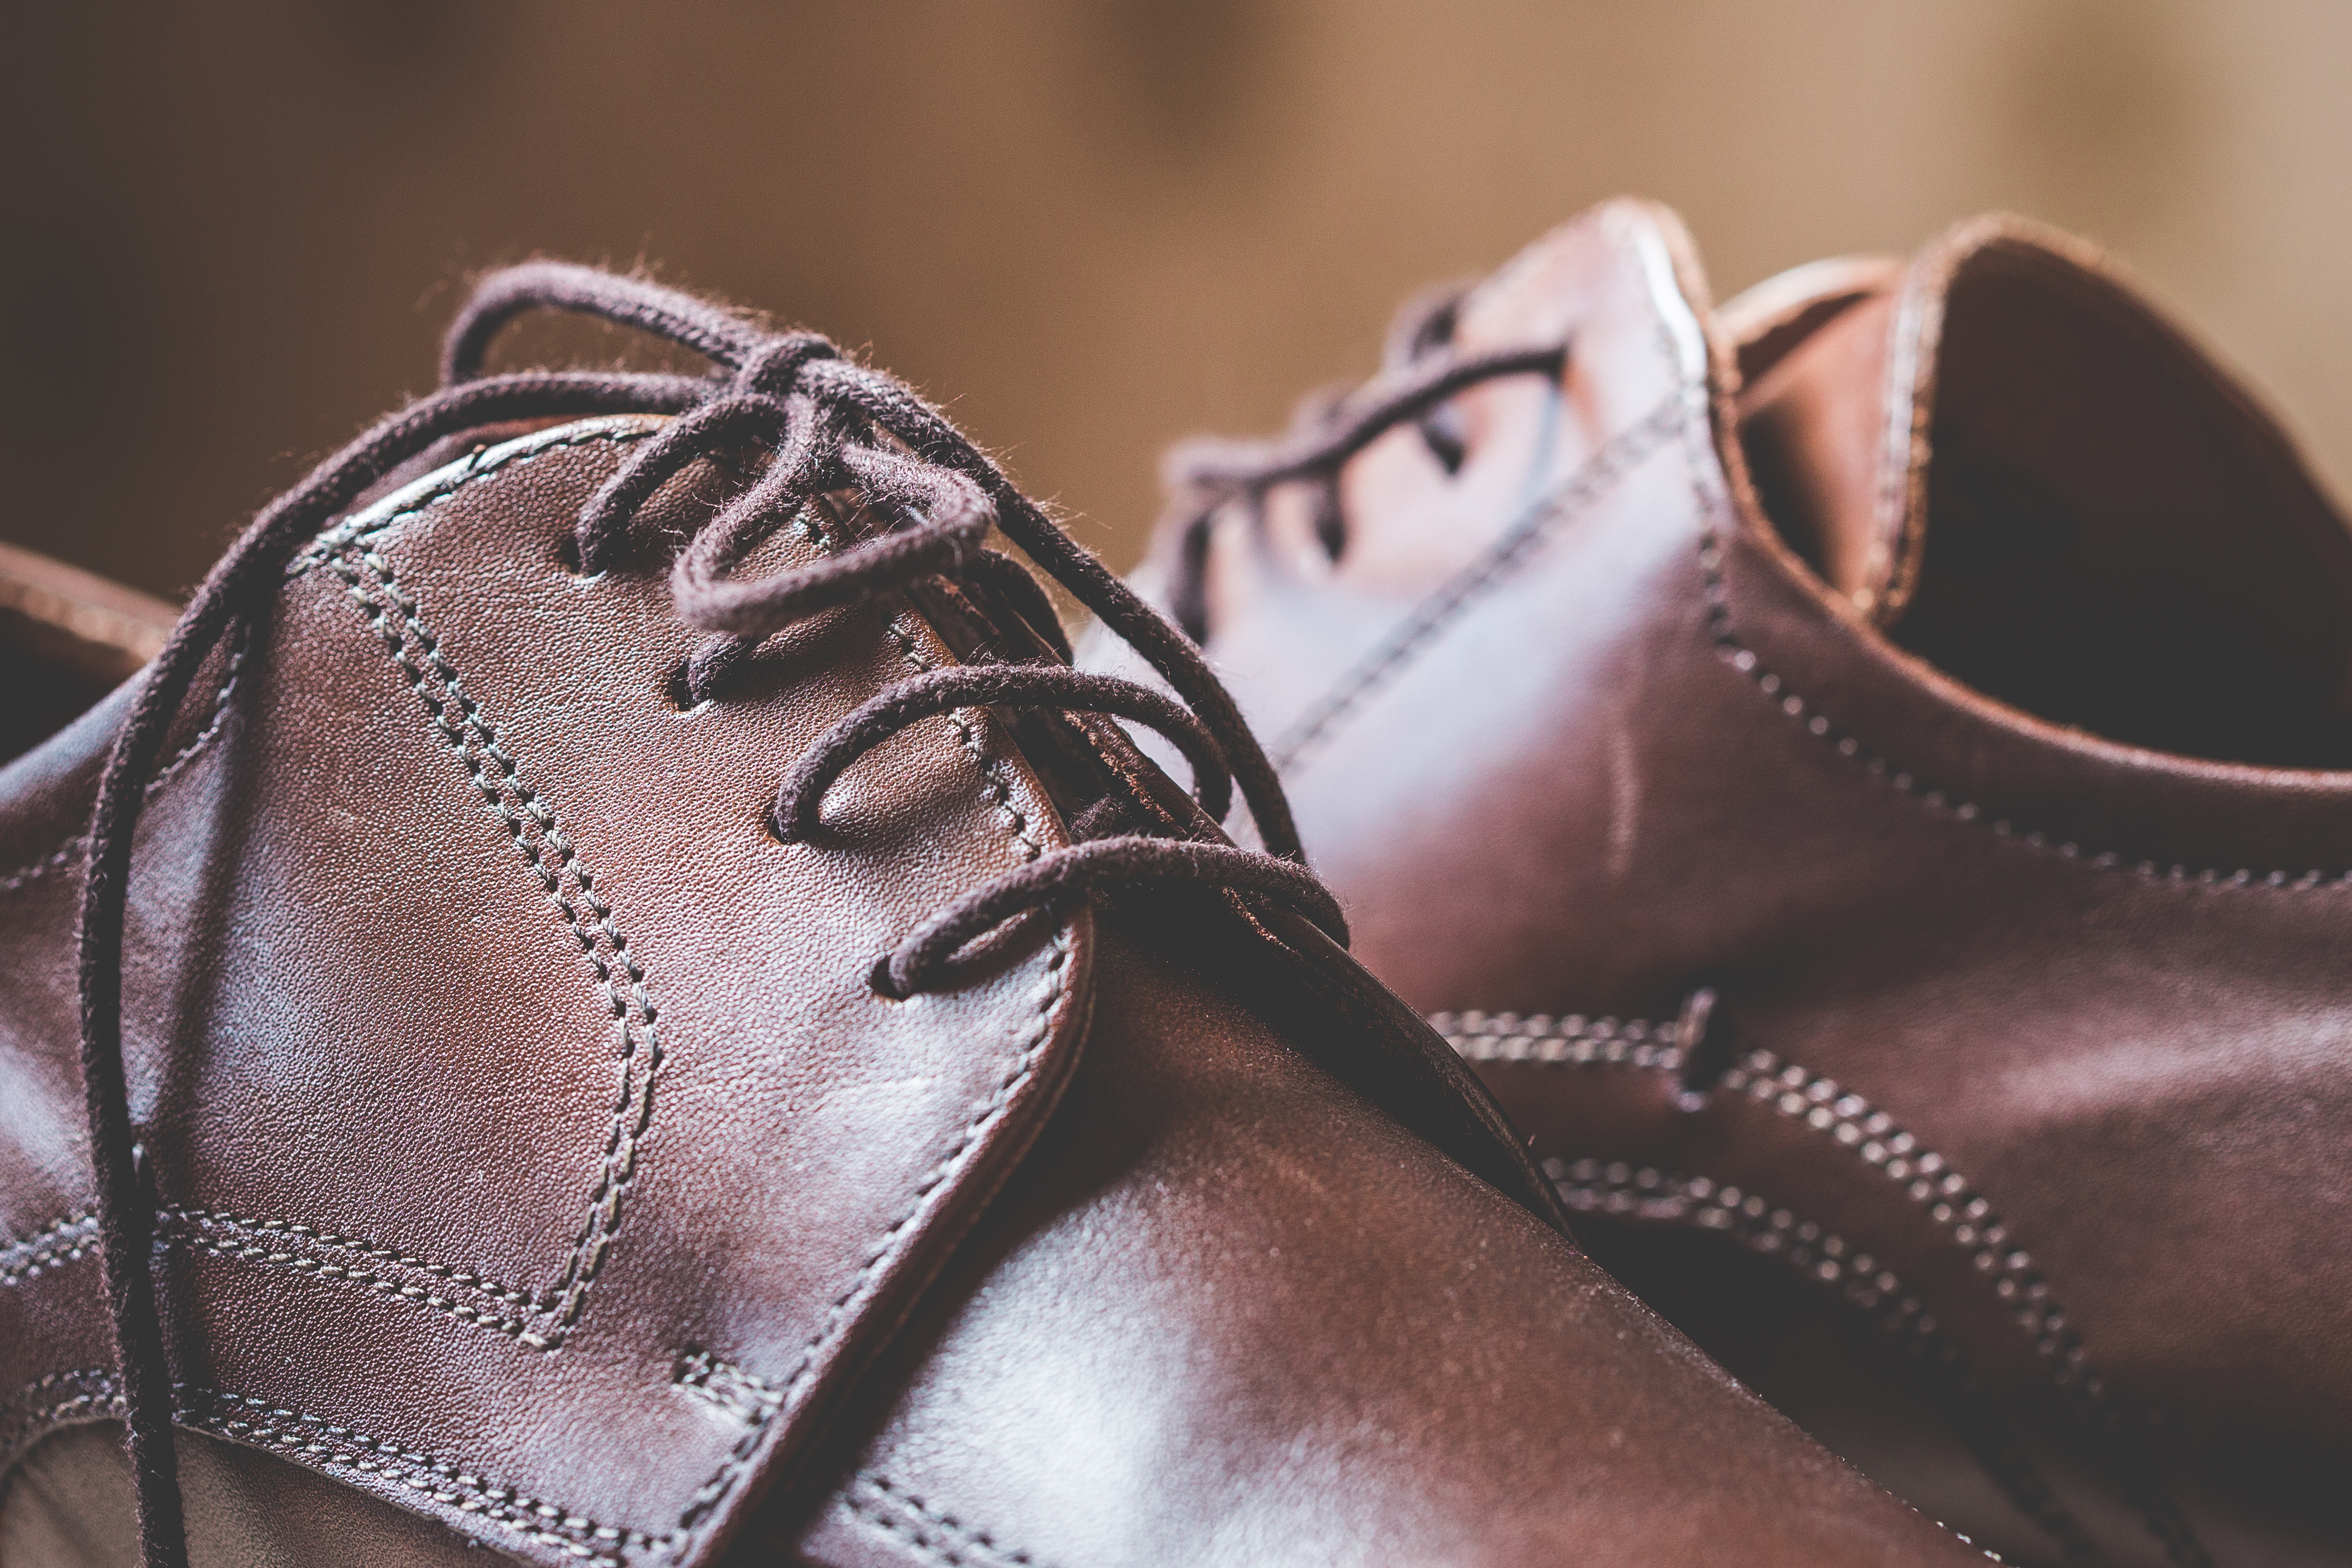 brown-leather-shoes-shoelaces-close-up-2-picjumbo-com